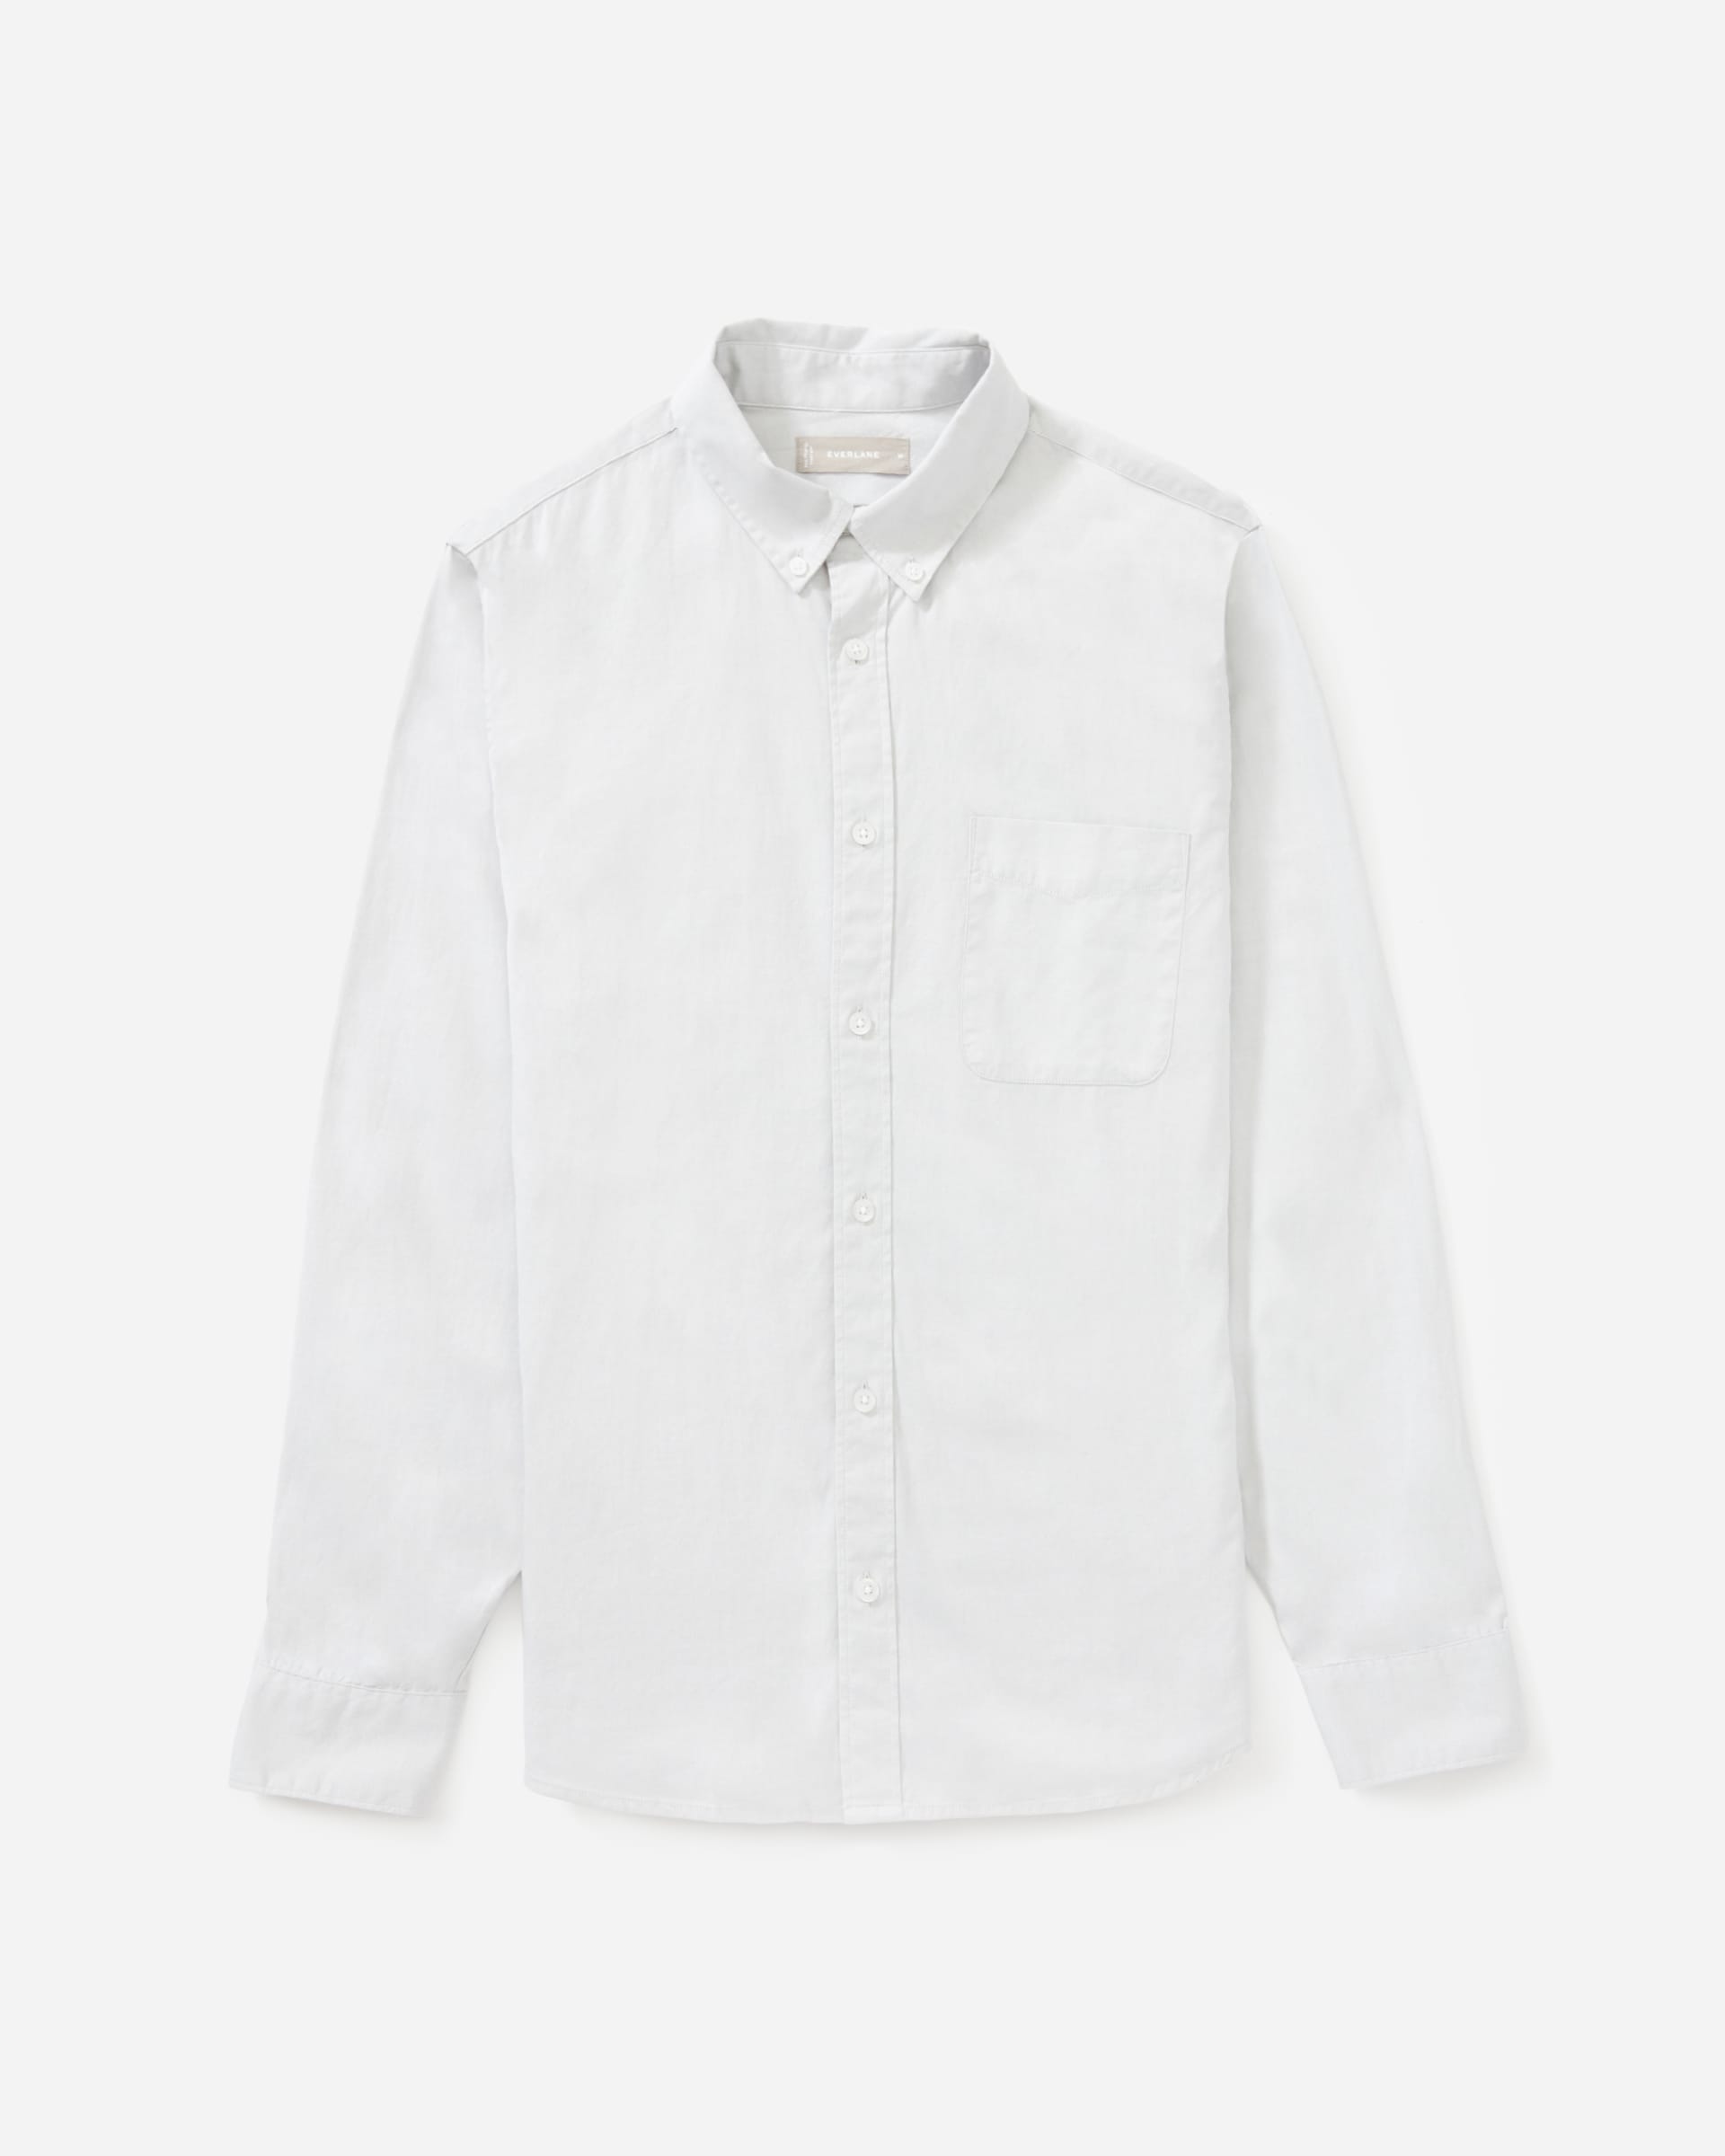 The Air Oxford Shirt Pale Charcoal – Everlane